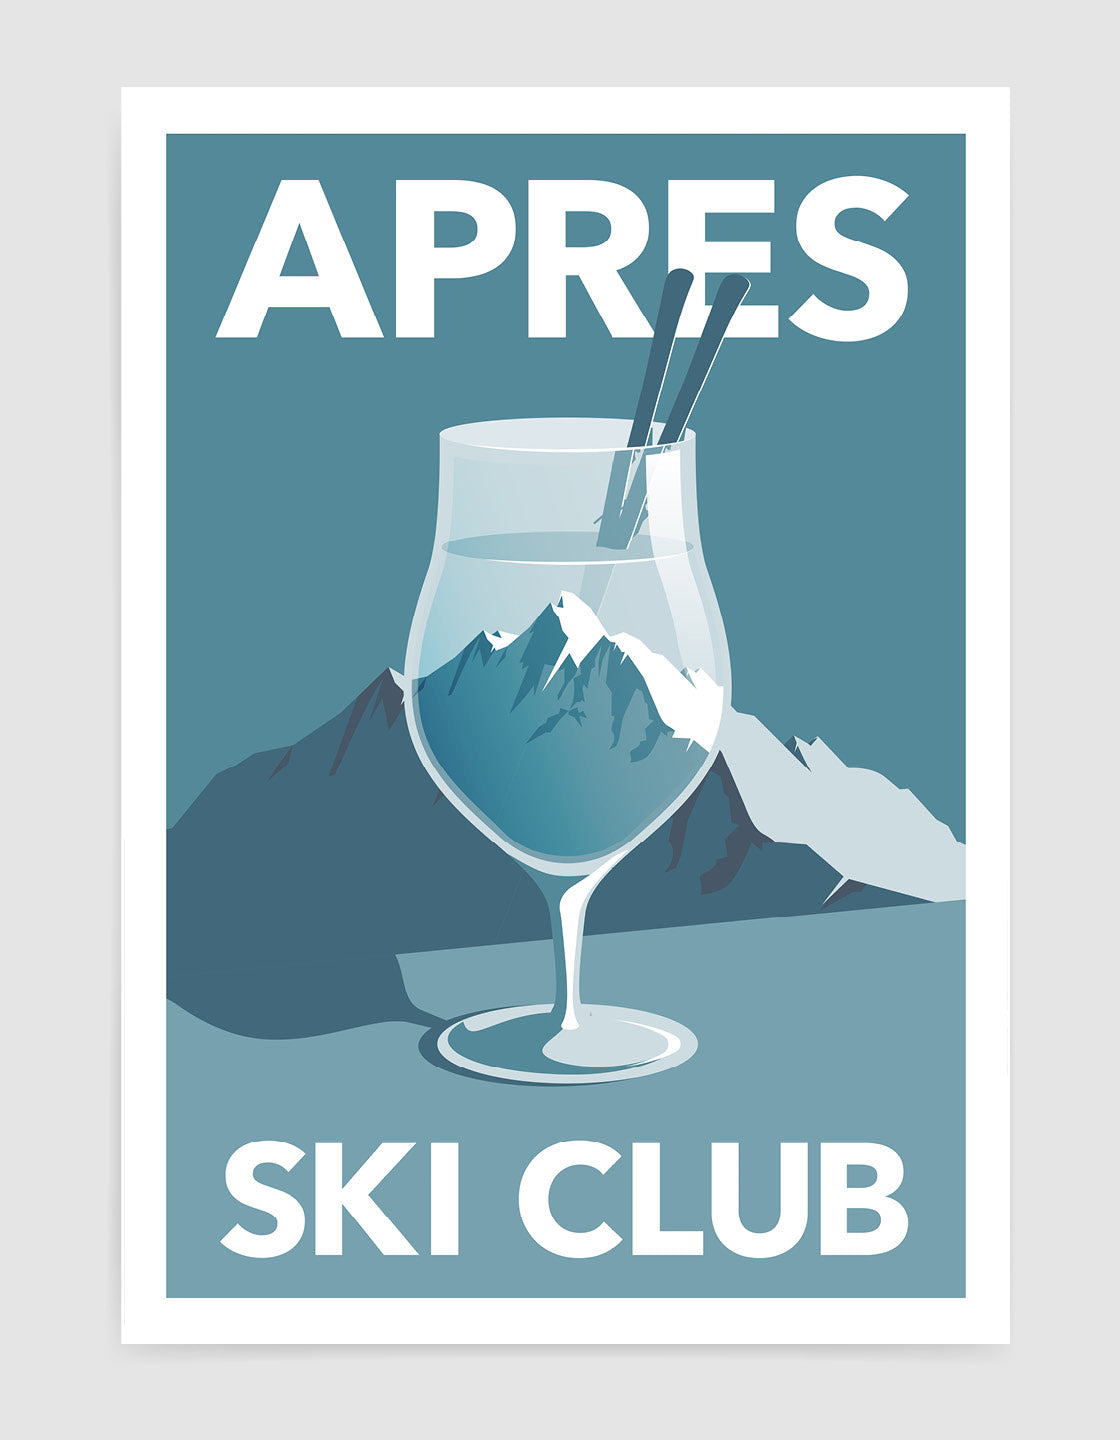 Apres ski